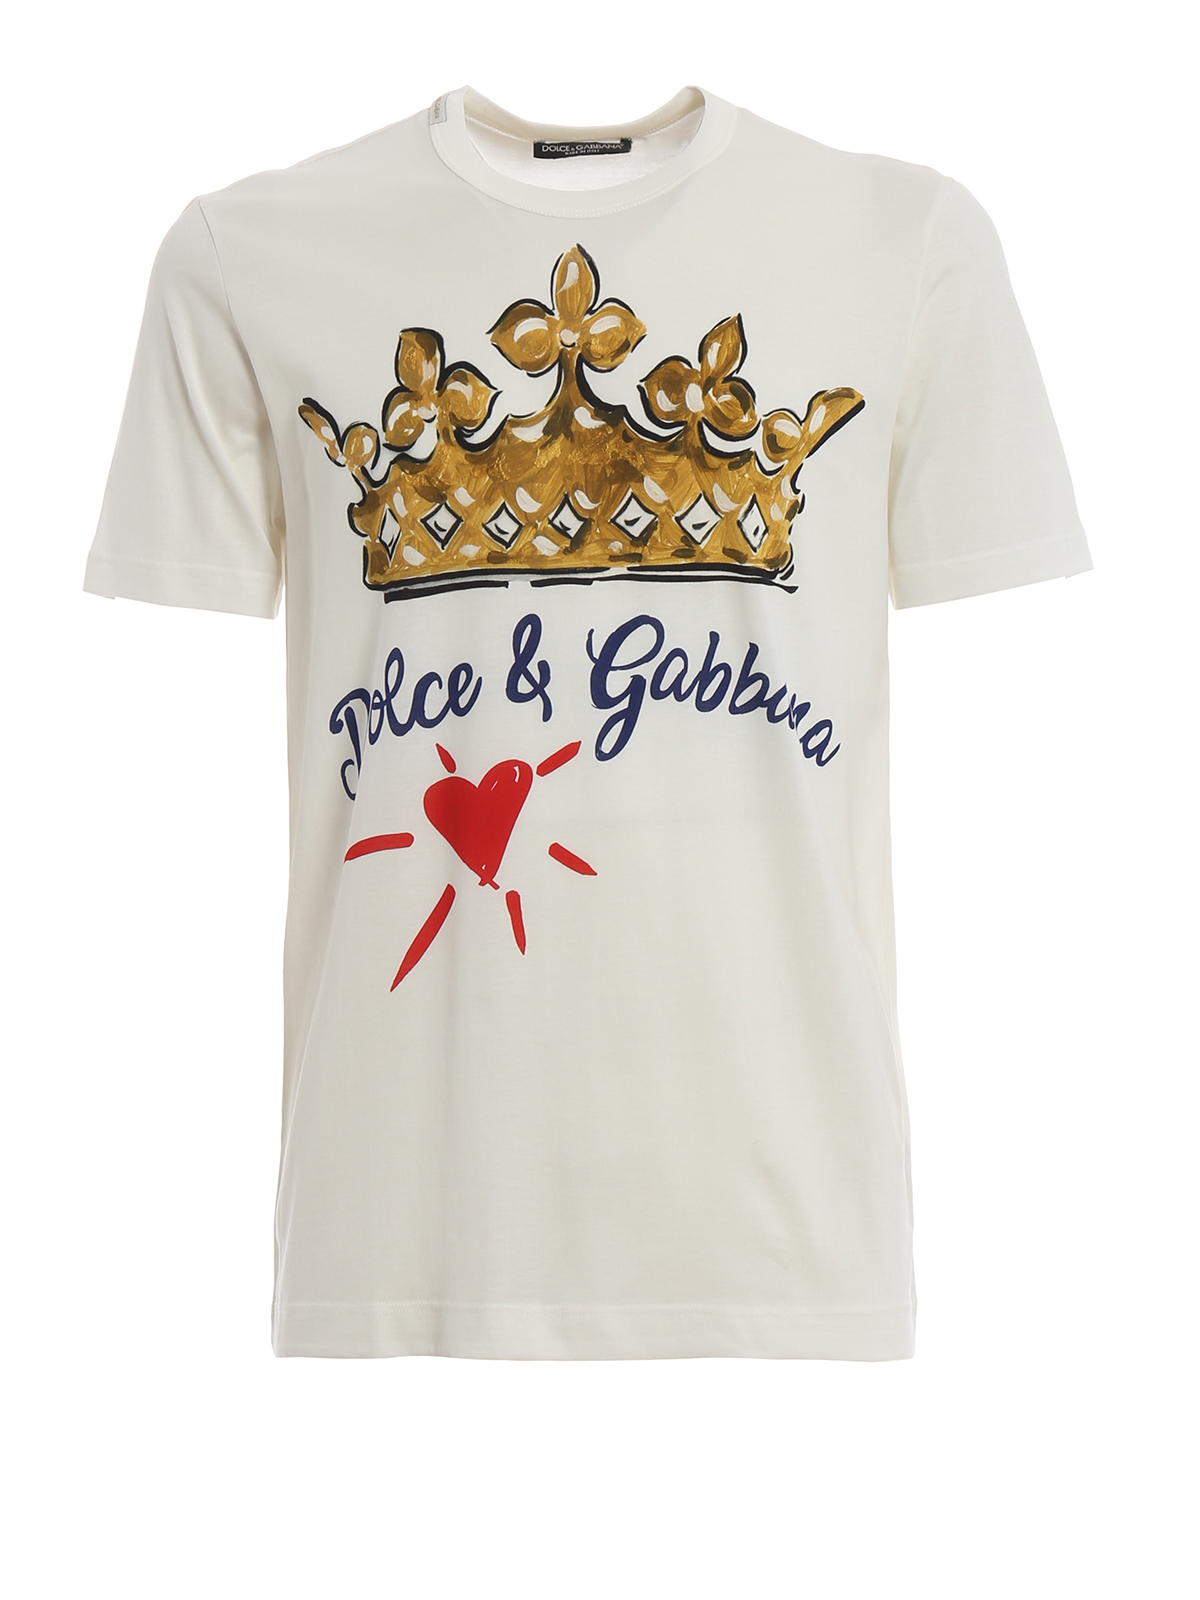 dolce and gabbana crown t shirt